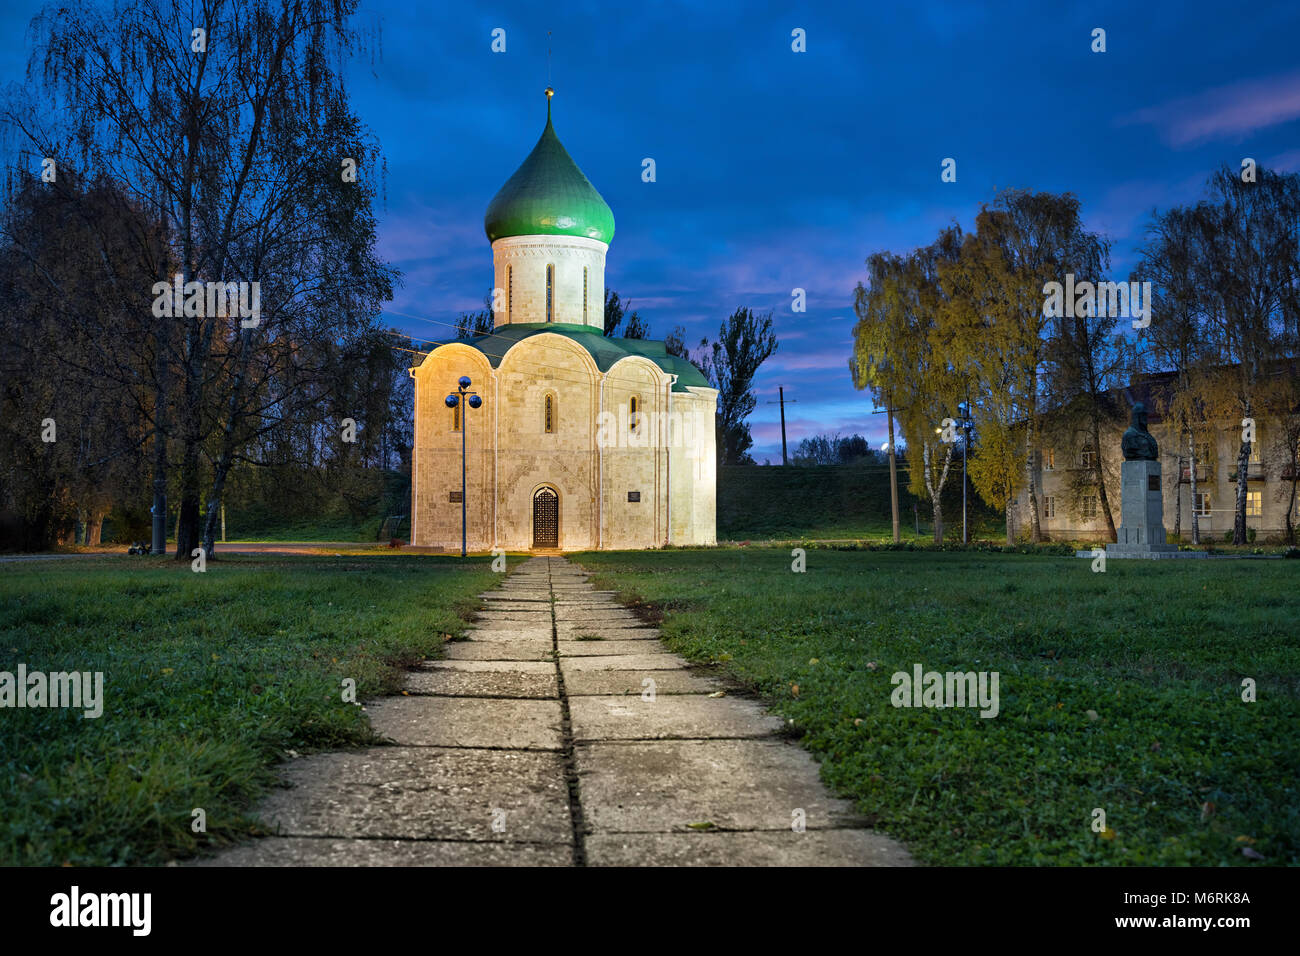 Cathédrale Spaso-preobrajensky au crépuscule de Pereslavl-zalesski, Yaroslavlskaya oblast, Russie Banque D'Images